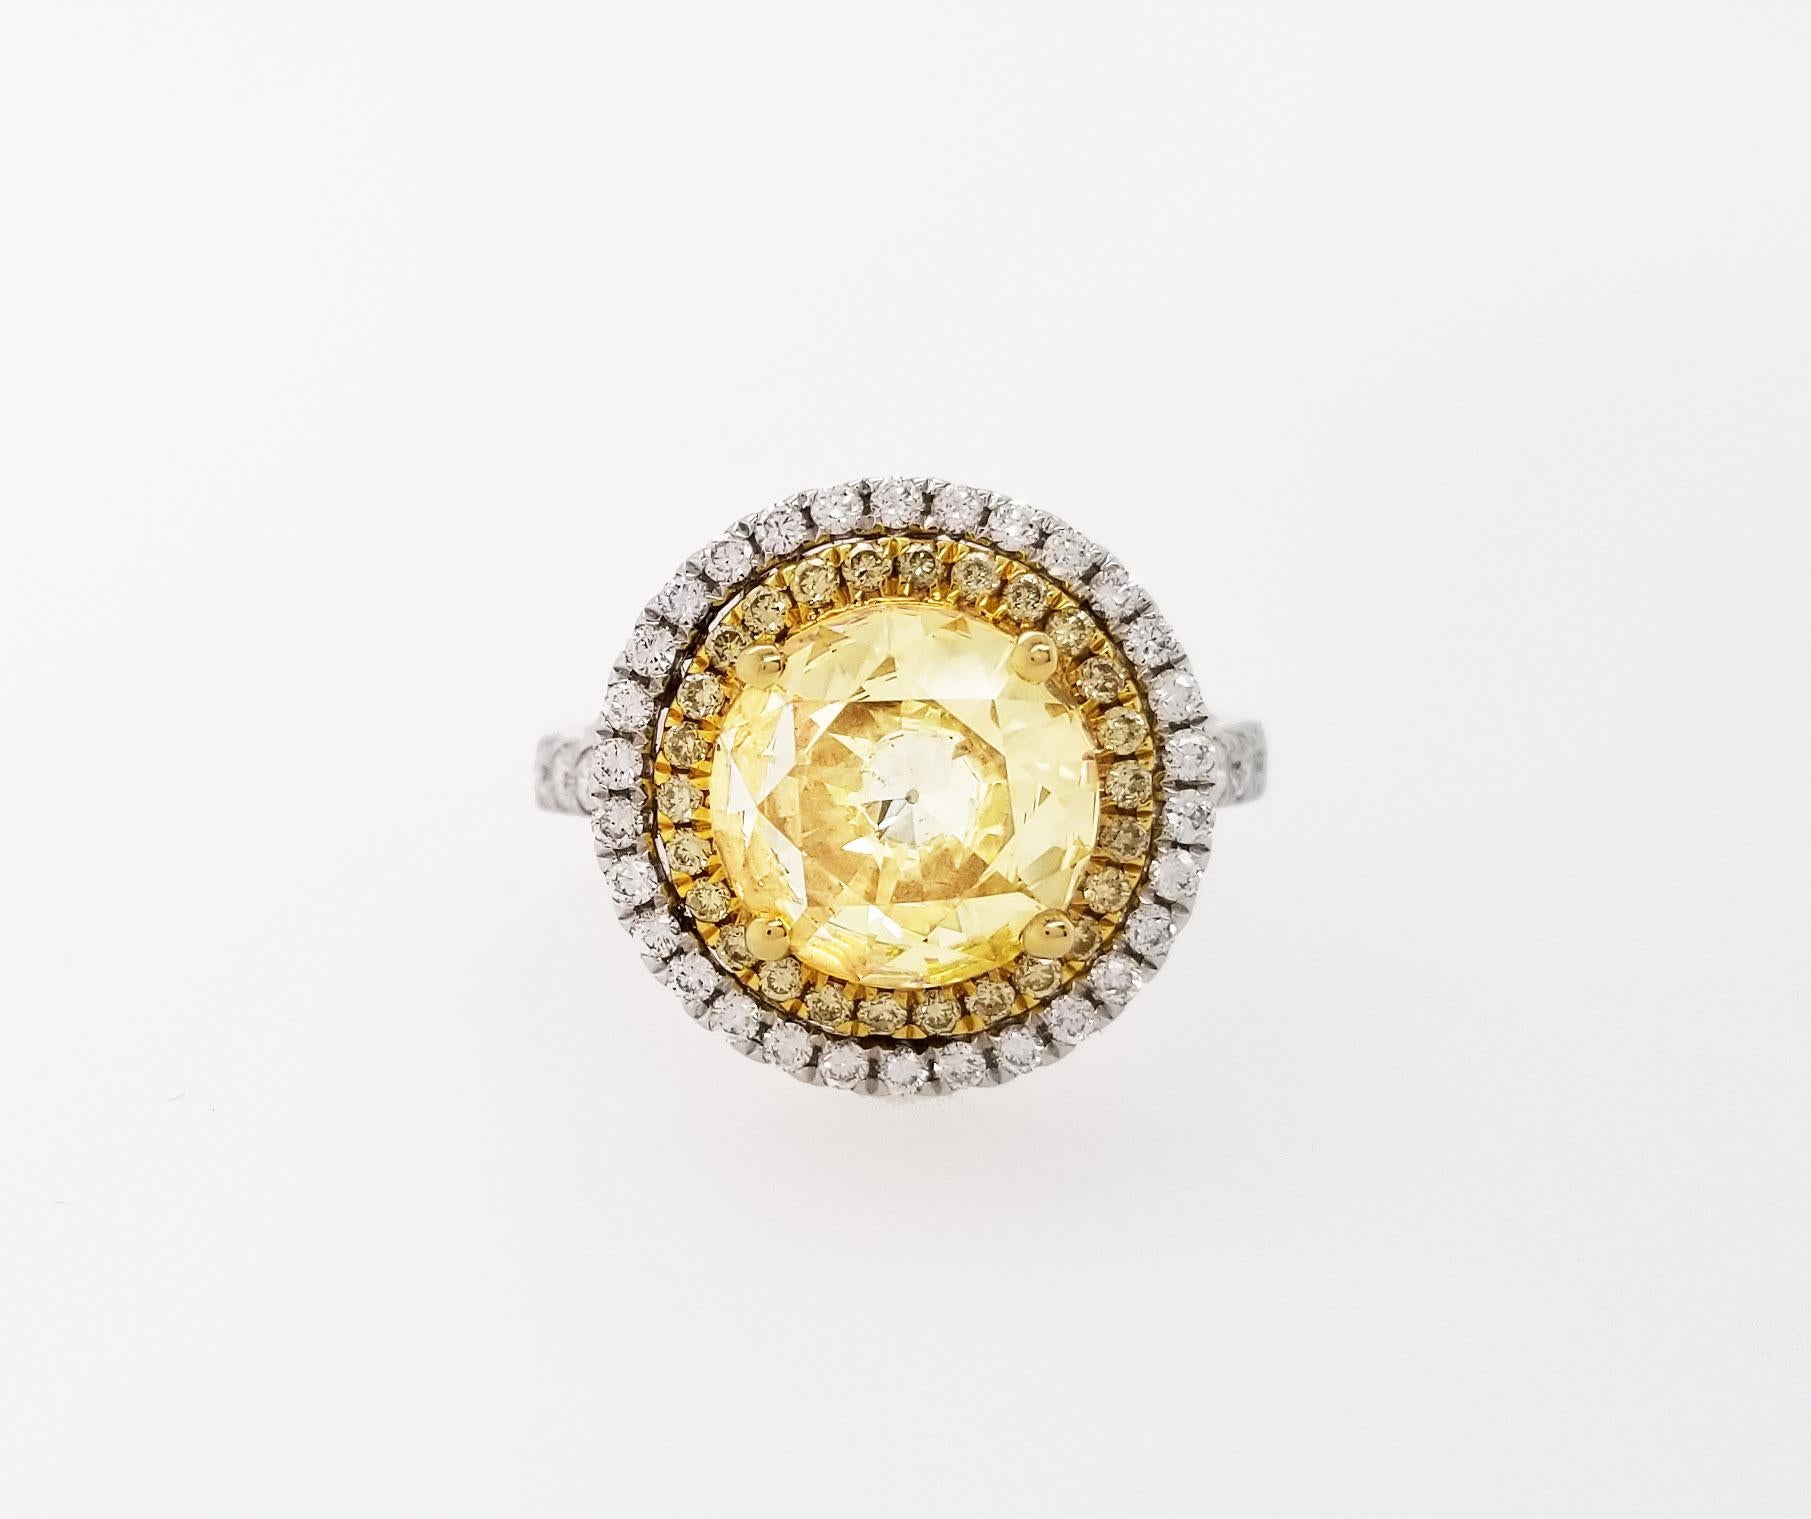 Contemporary Scarselli 18 Karat Gold Ring 2 Carat Fancy Yellow Diamond GIA